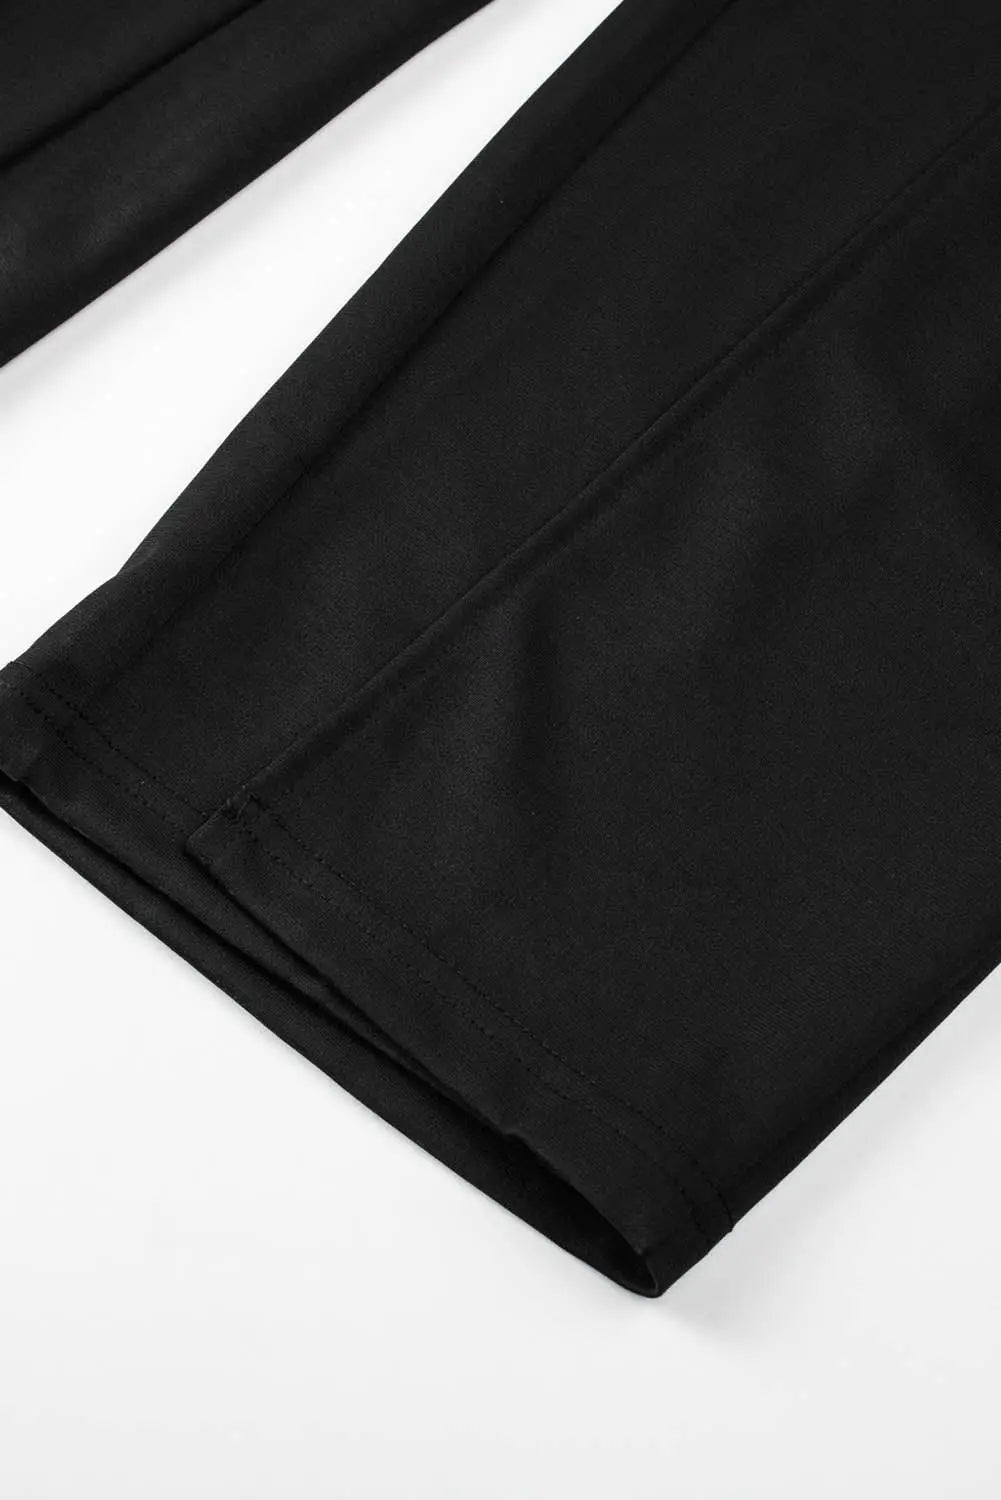 Black spaghetti straps slit leg jumpsuit with pockets - jumpsuits & rompers